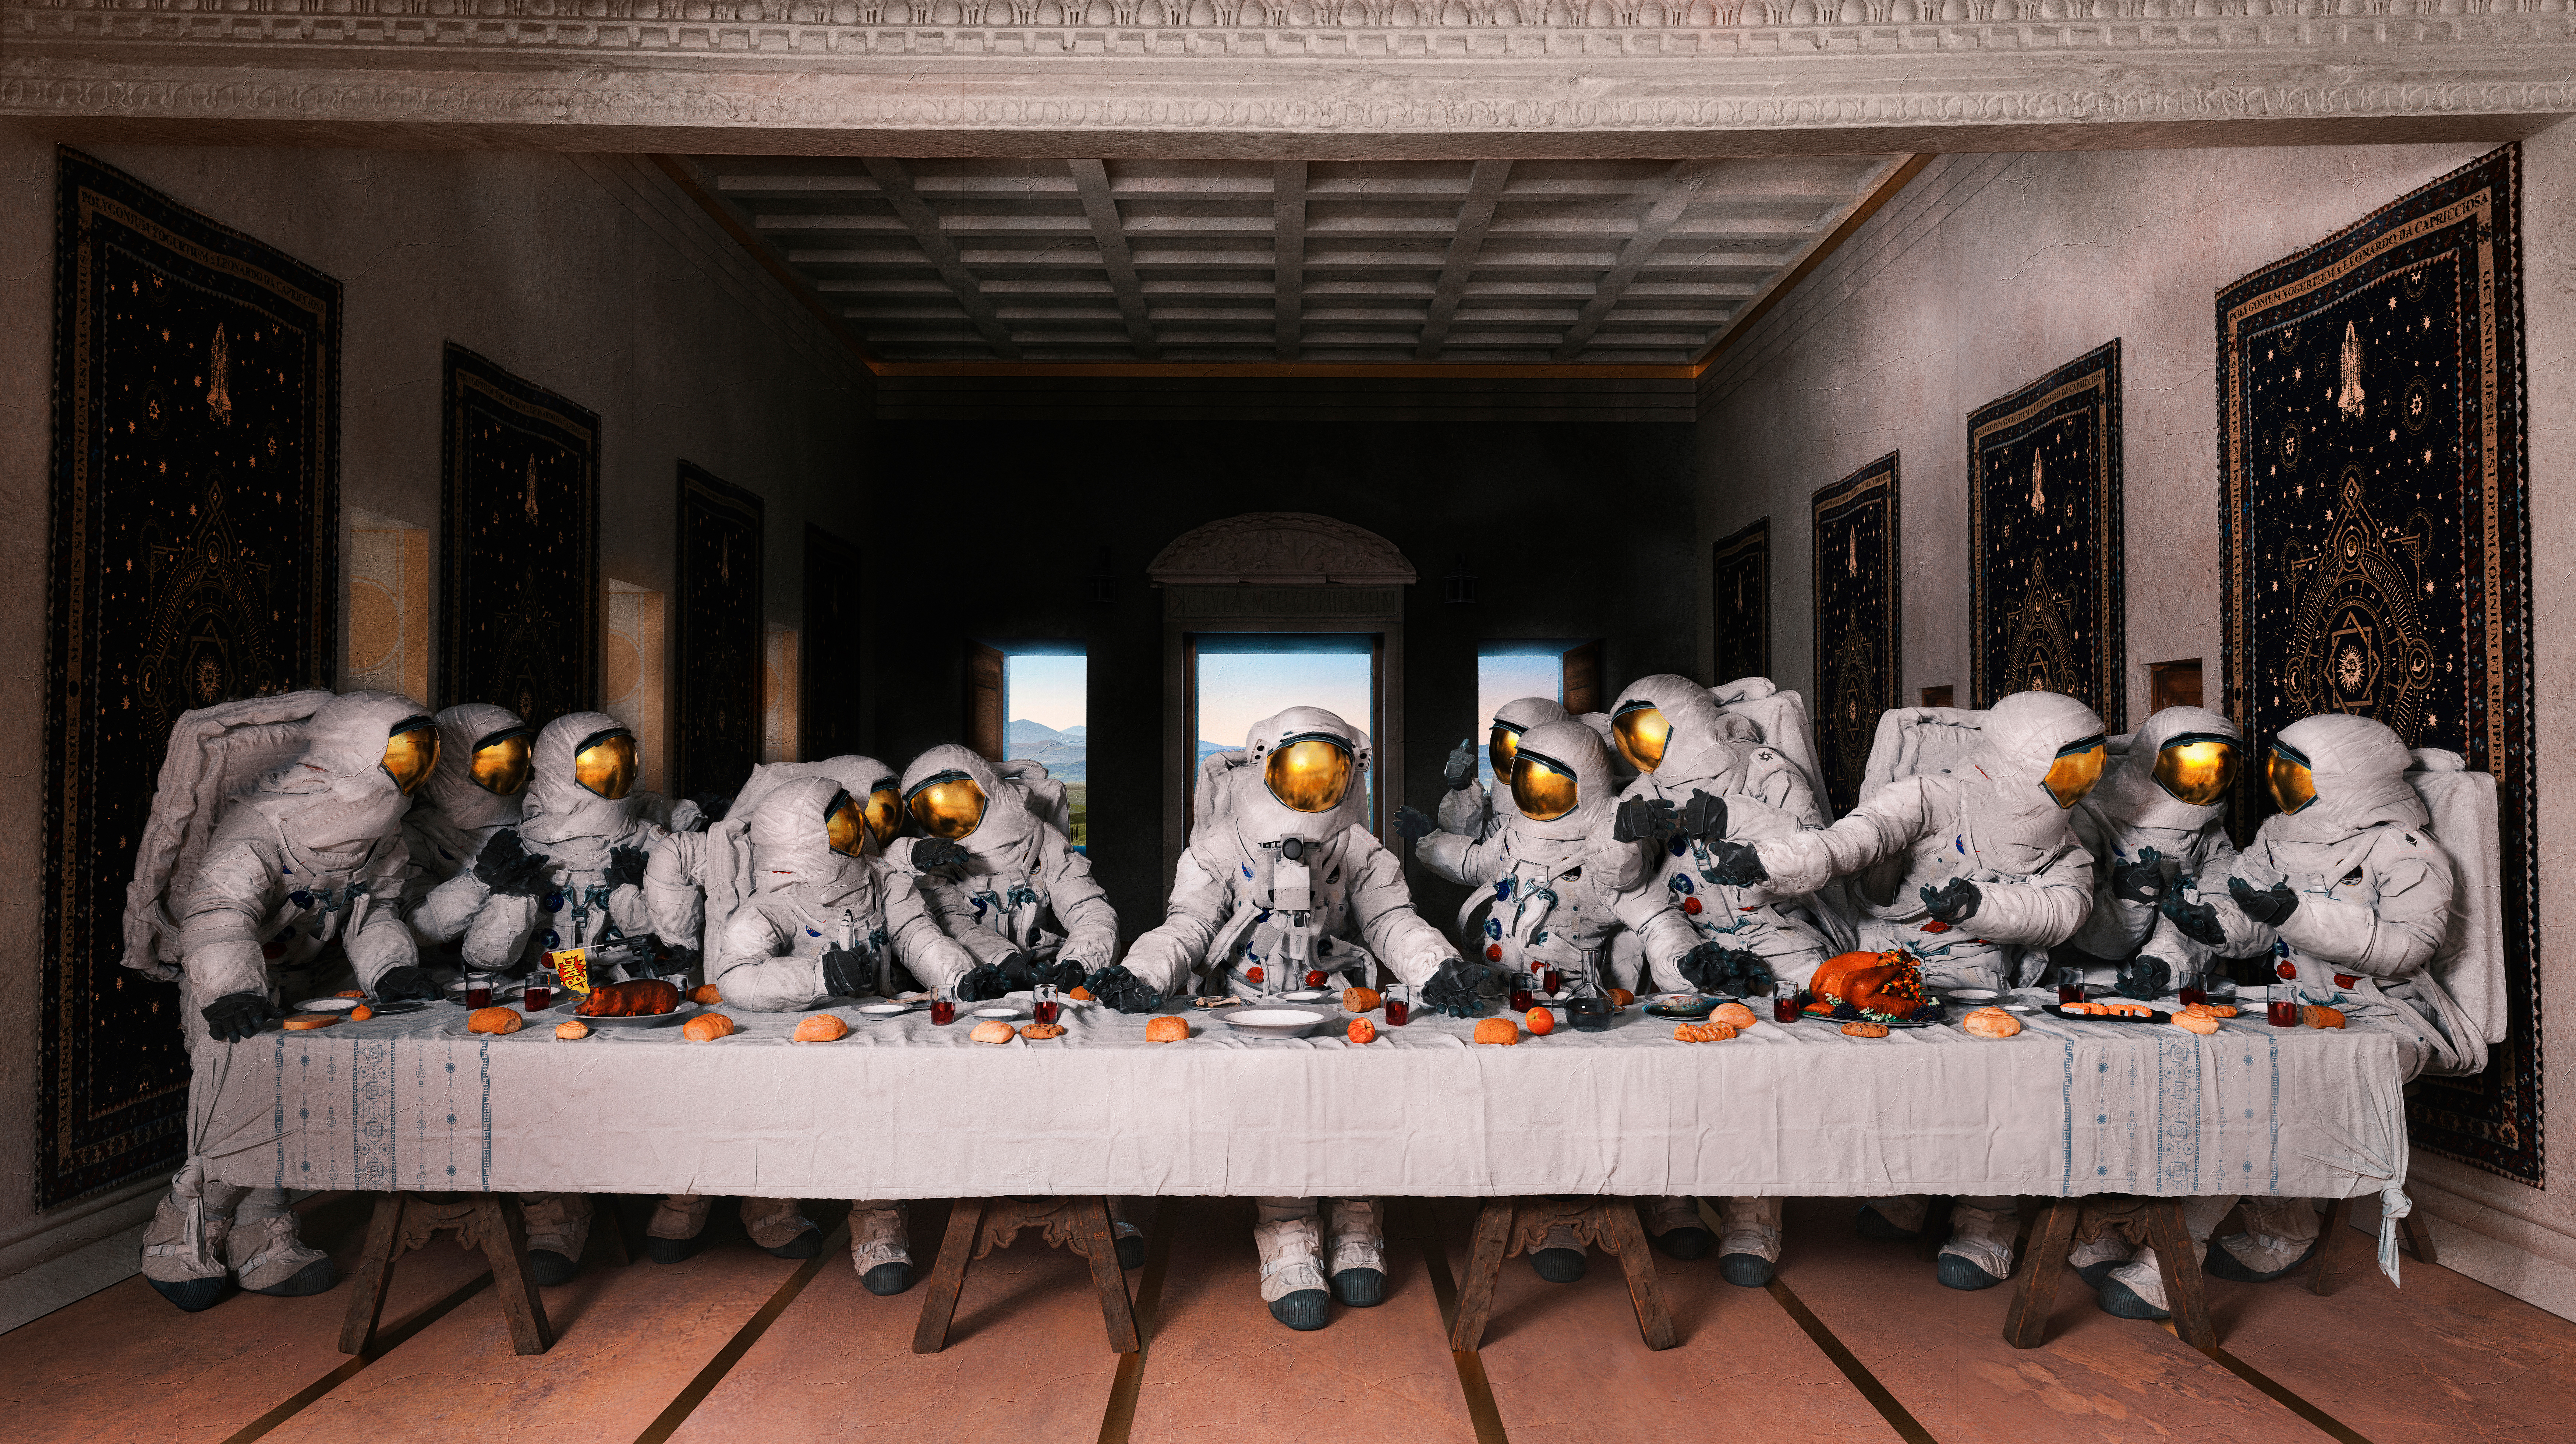 General 7000x3923 The Last Supper fan art digital art artwork astronaut illustration painting digital painting space spacesuit parody table interior indoors environment